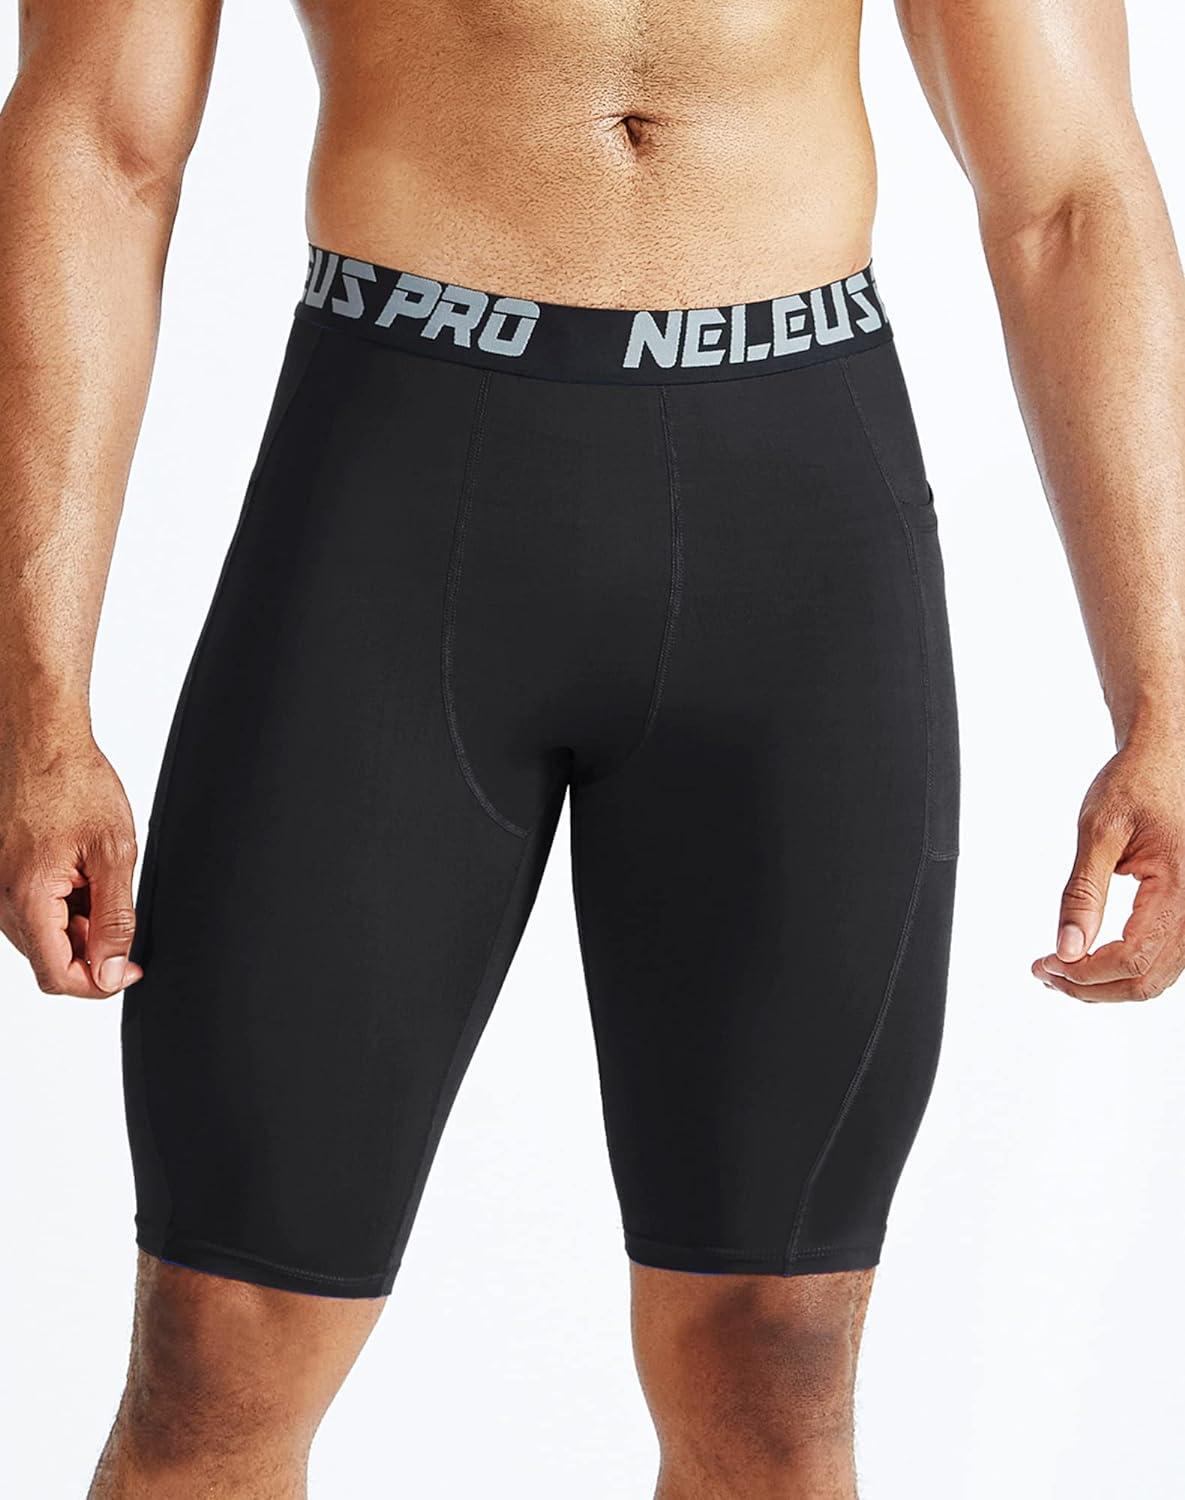 Neleus Men's Dry Fit Compression Pants Workout Running Leggings